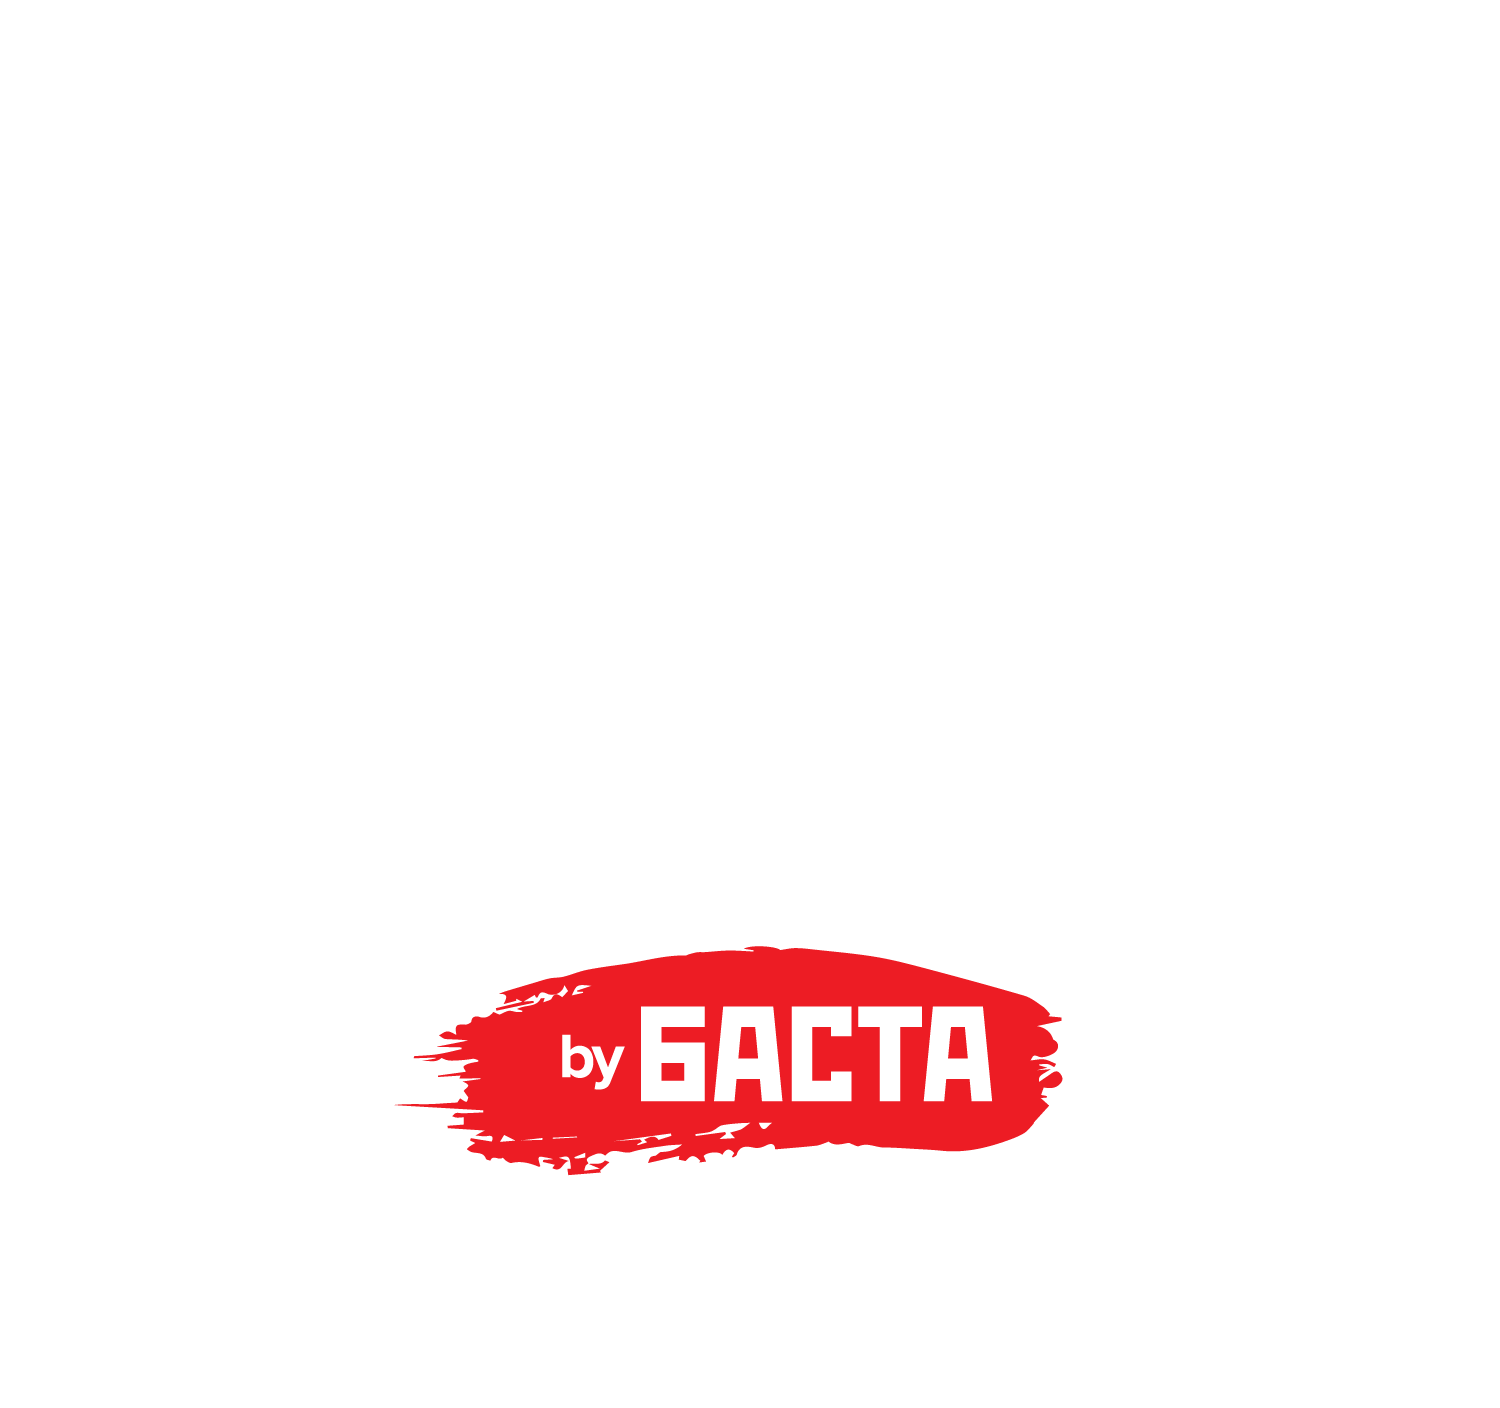 Фрэнк Баста. Frank basta лого. Фрэнк бай Баста. Ресторан Франк бай Баста.